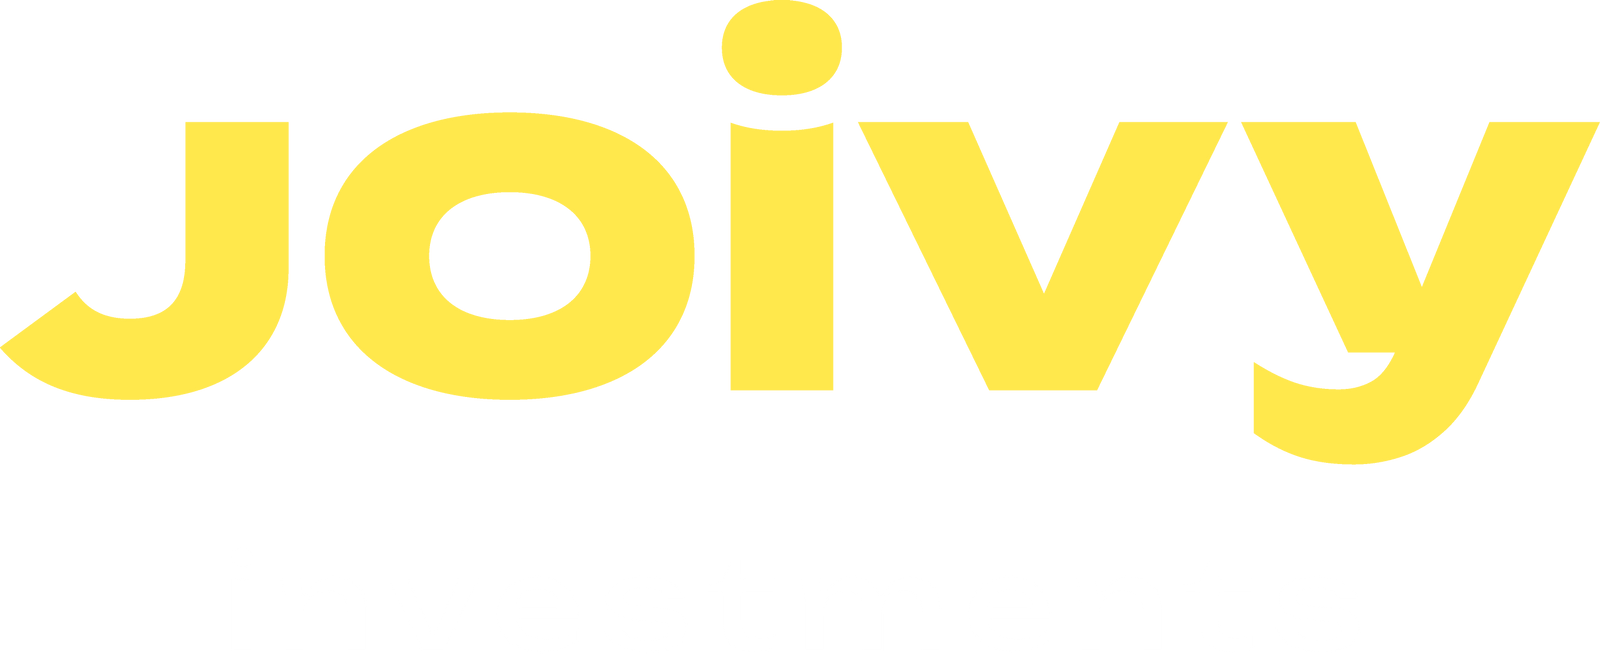 Real Estate Investments - DoveVivoAgency Placeholder